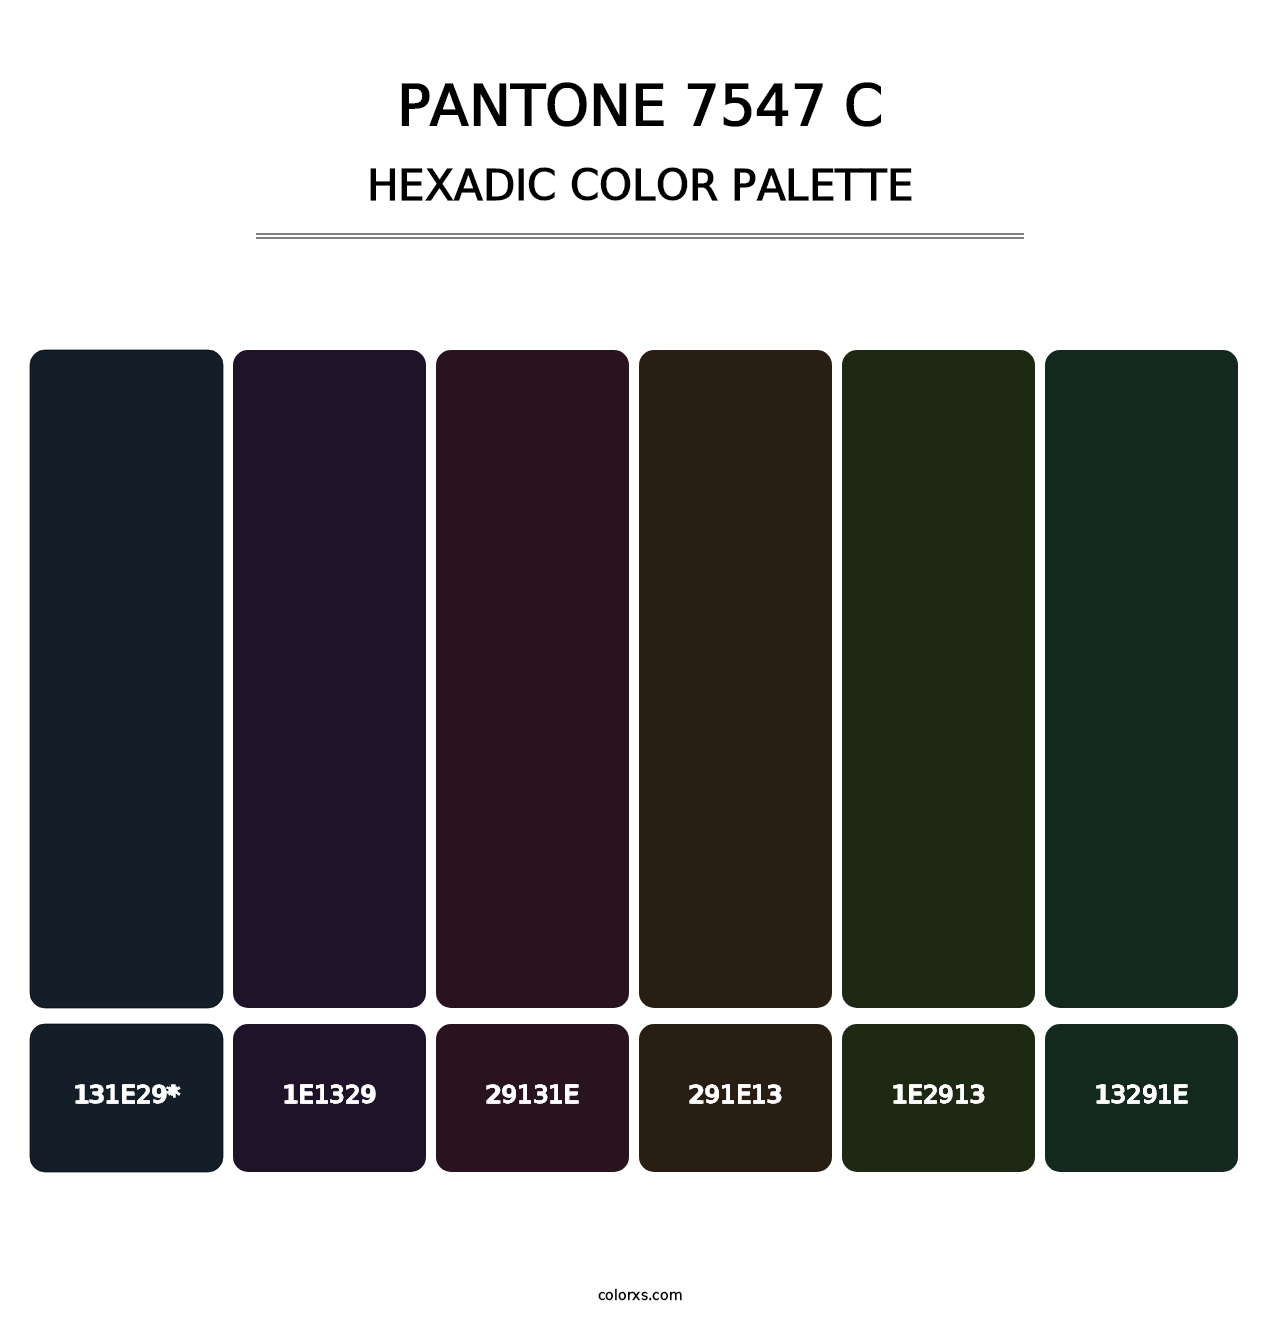 PANTONE 7547 C - Hexadic Color Palette